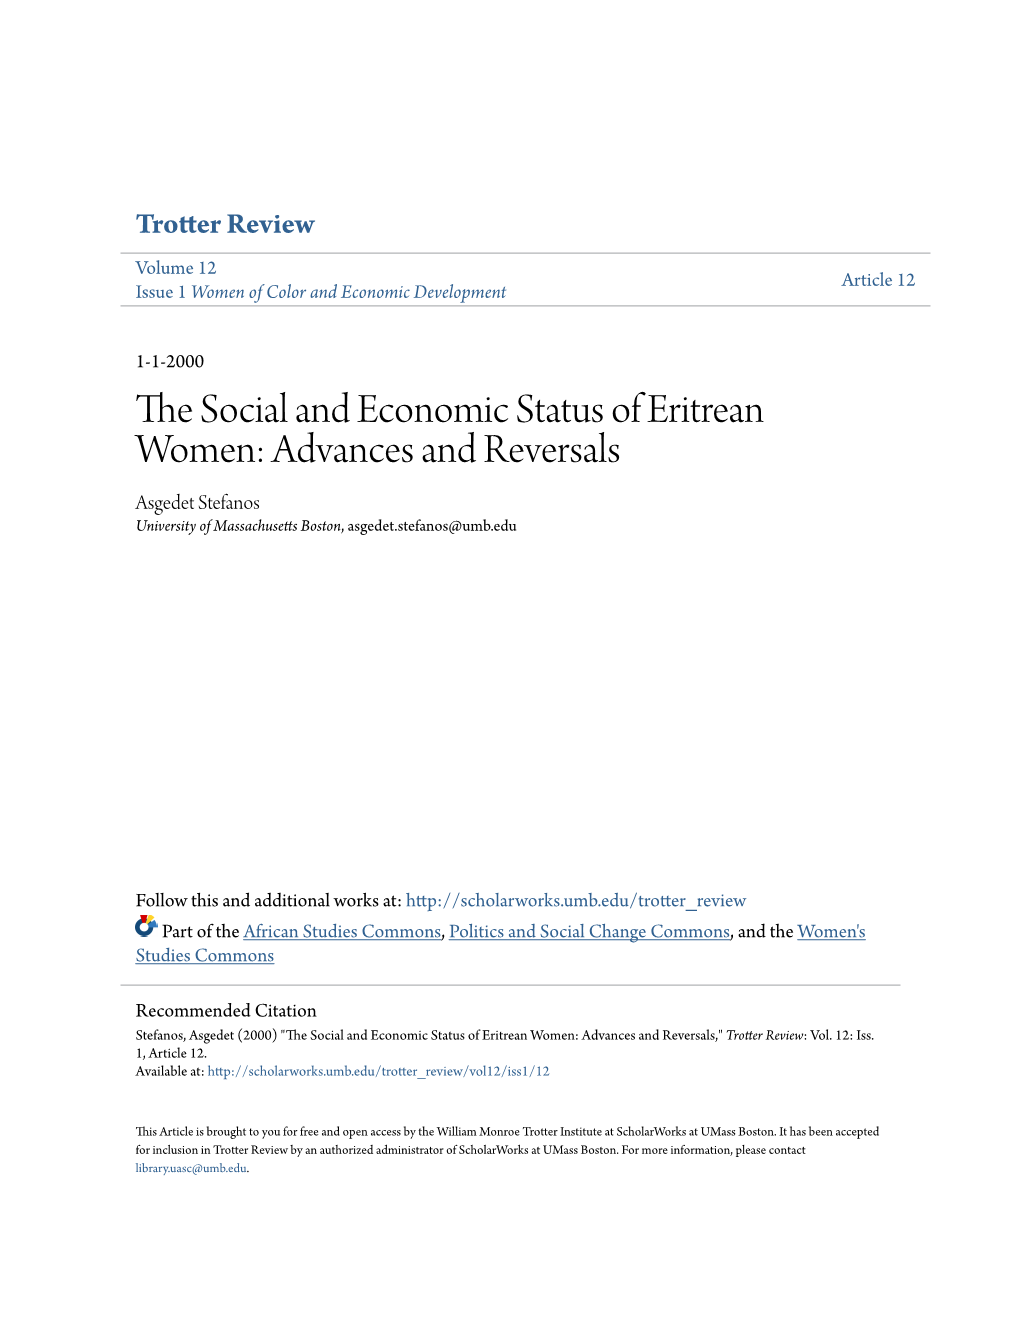 The Social and Economic Status of Eritrean Women